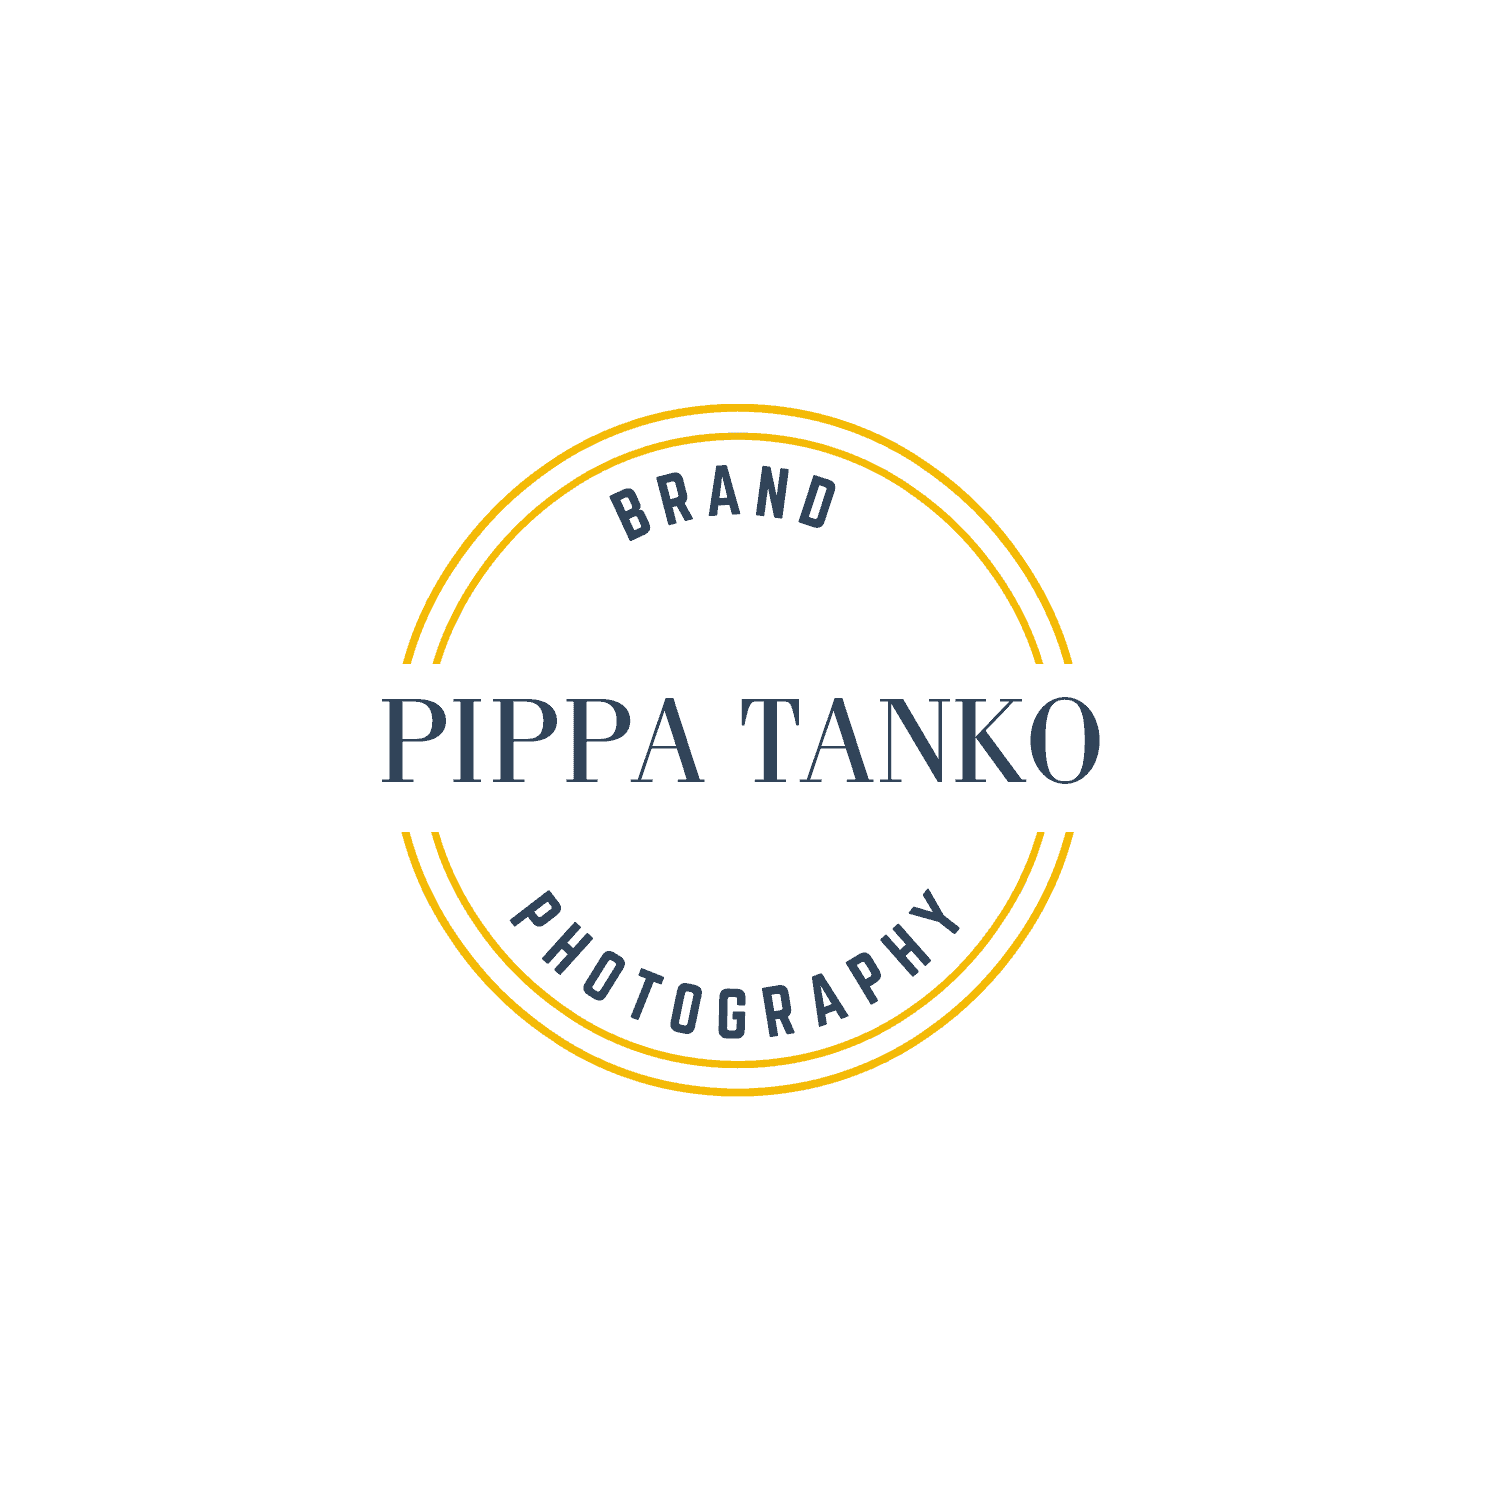 Pippa Tanko Brand Photography